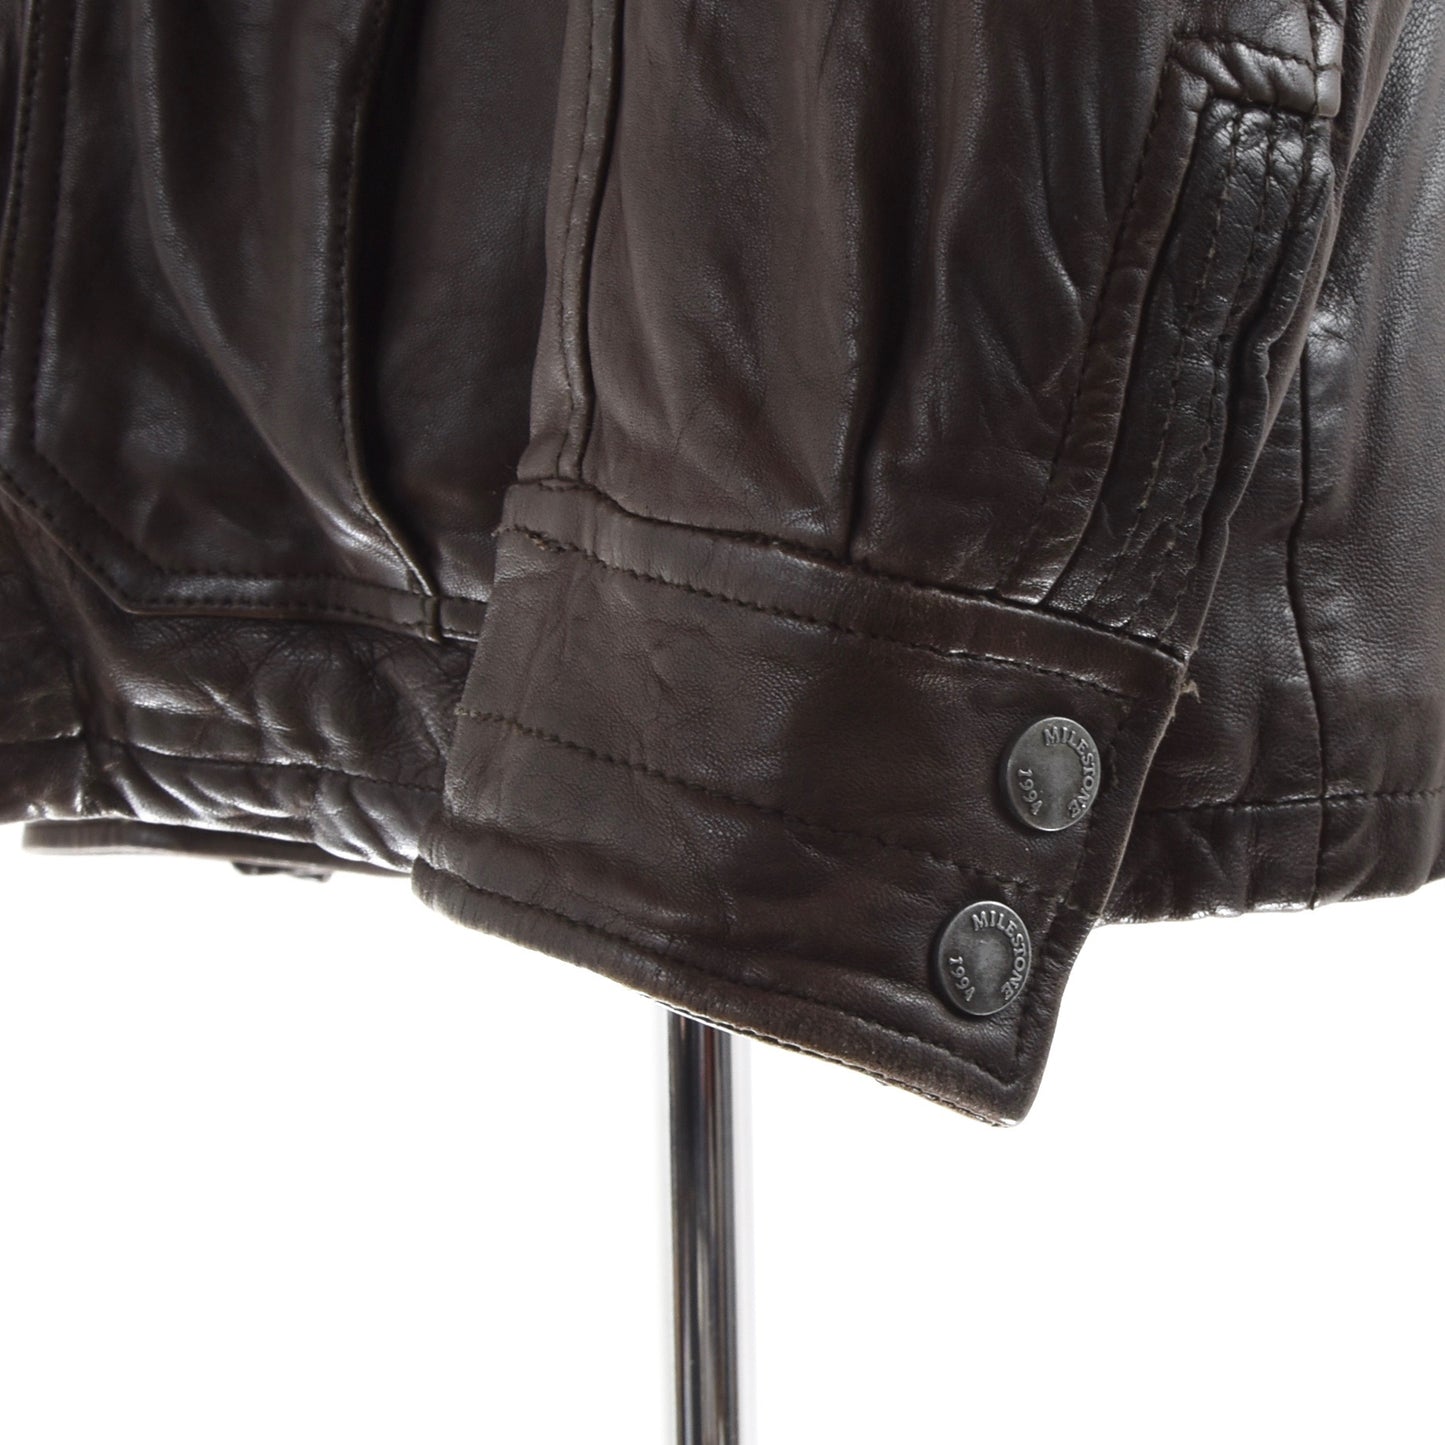 Milestone Lamb Leather Coat Size 48/S - Brown